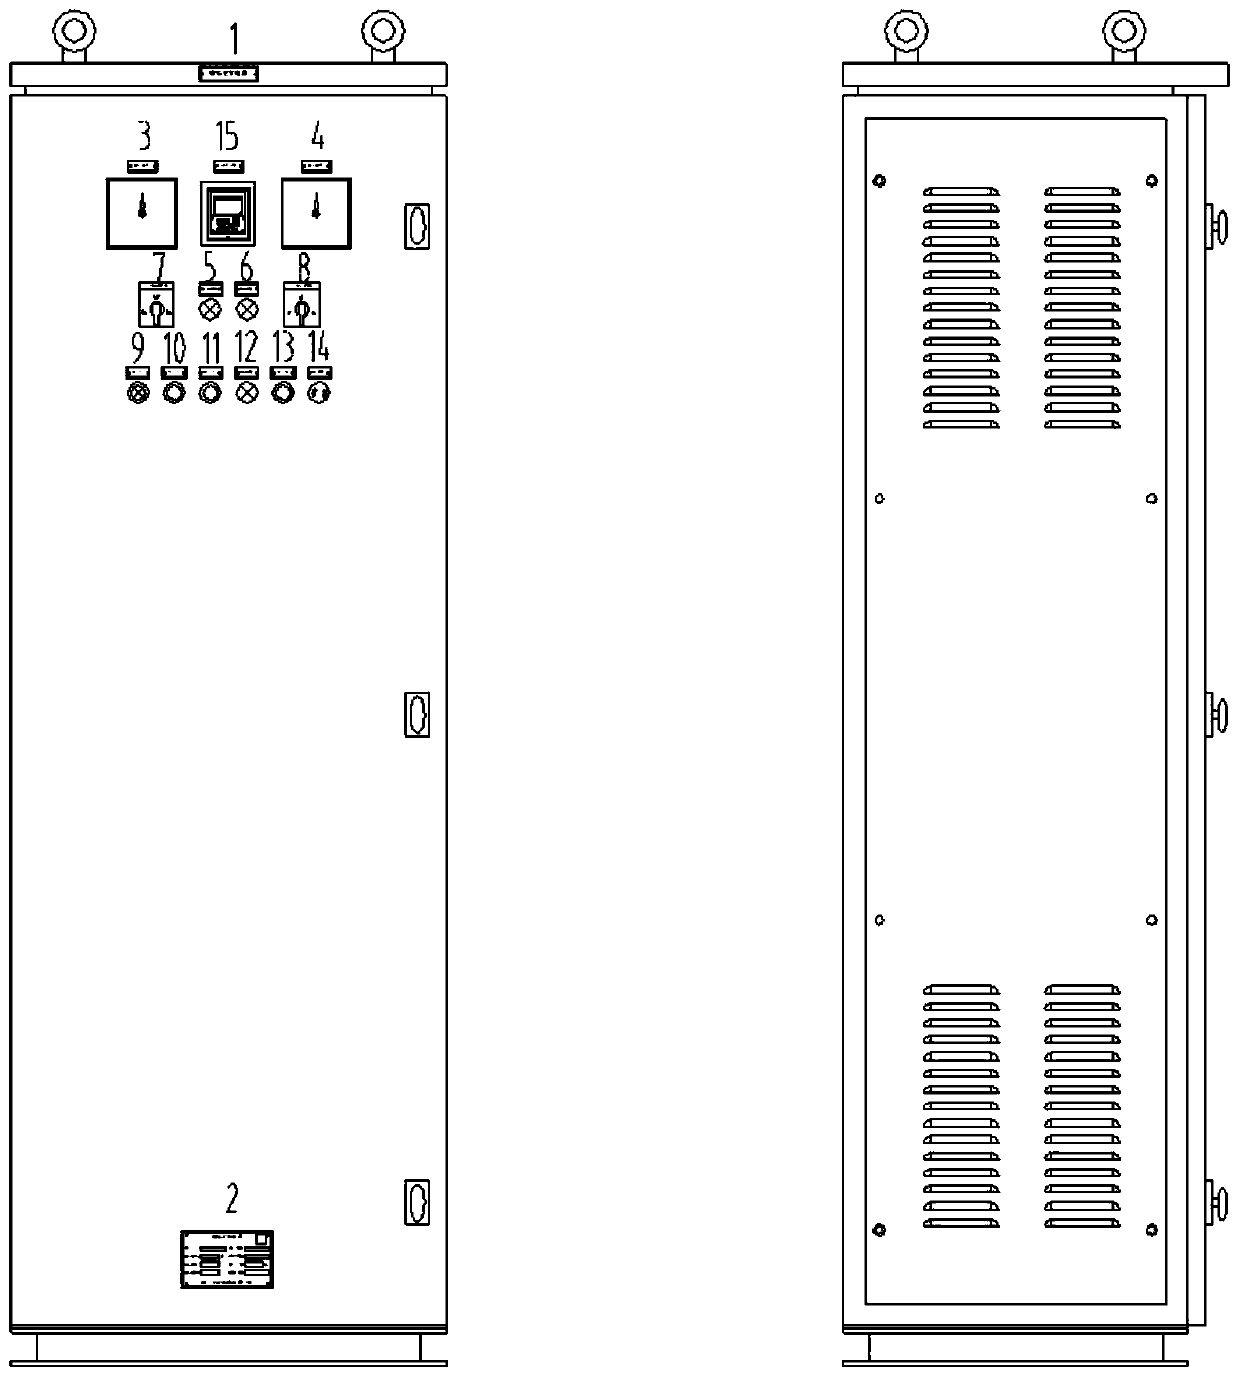 DC-AC inverter device for ship regional power distribution